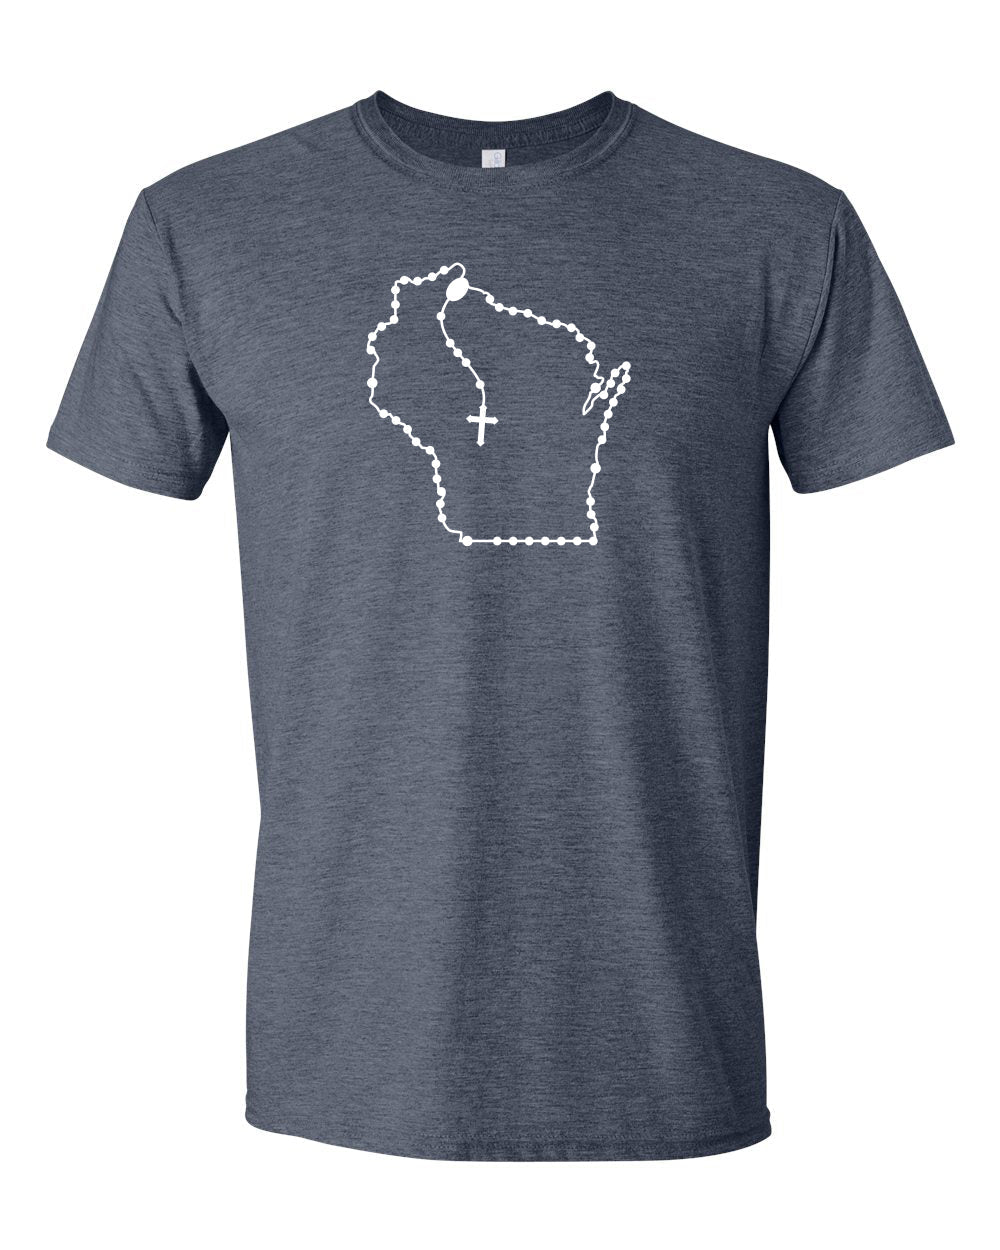 Wisconsin Catholic Rosary T-Shirt